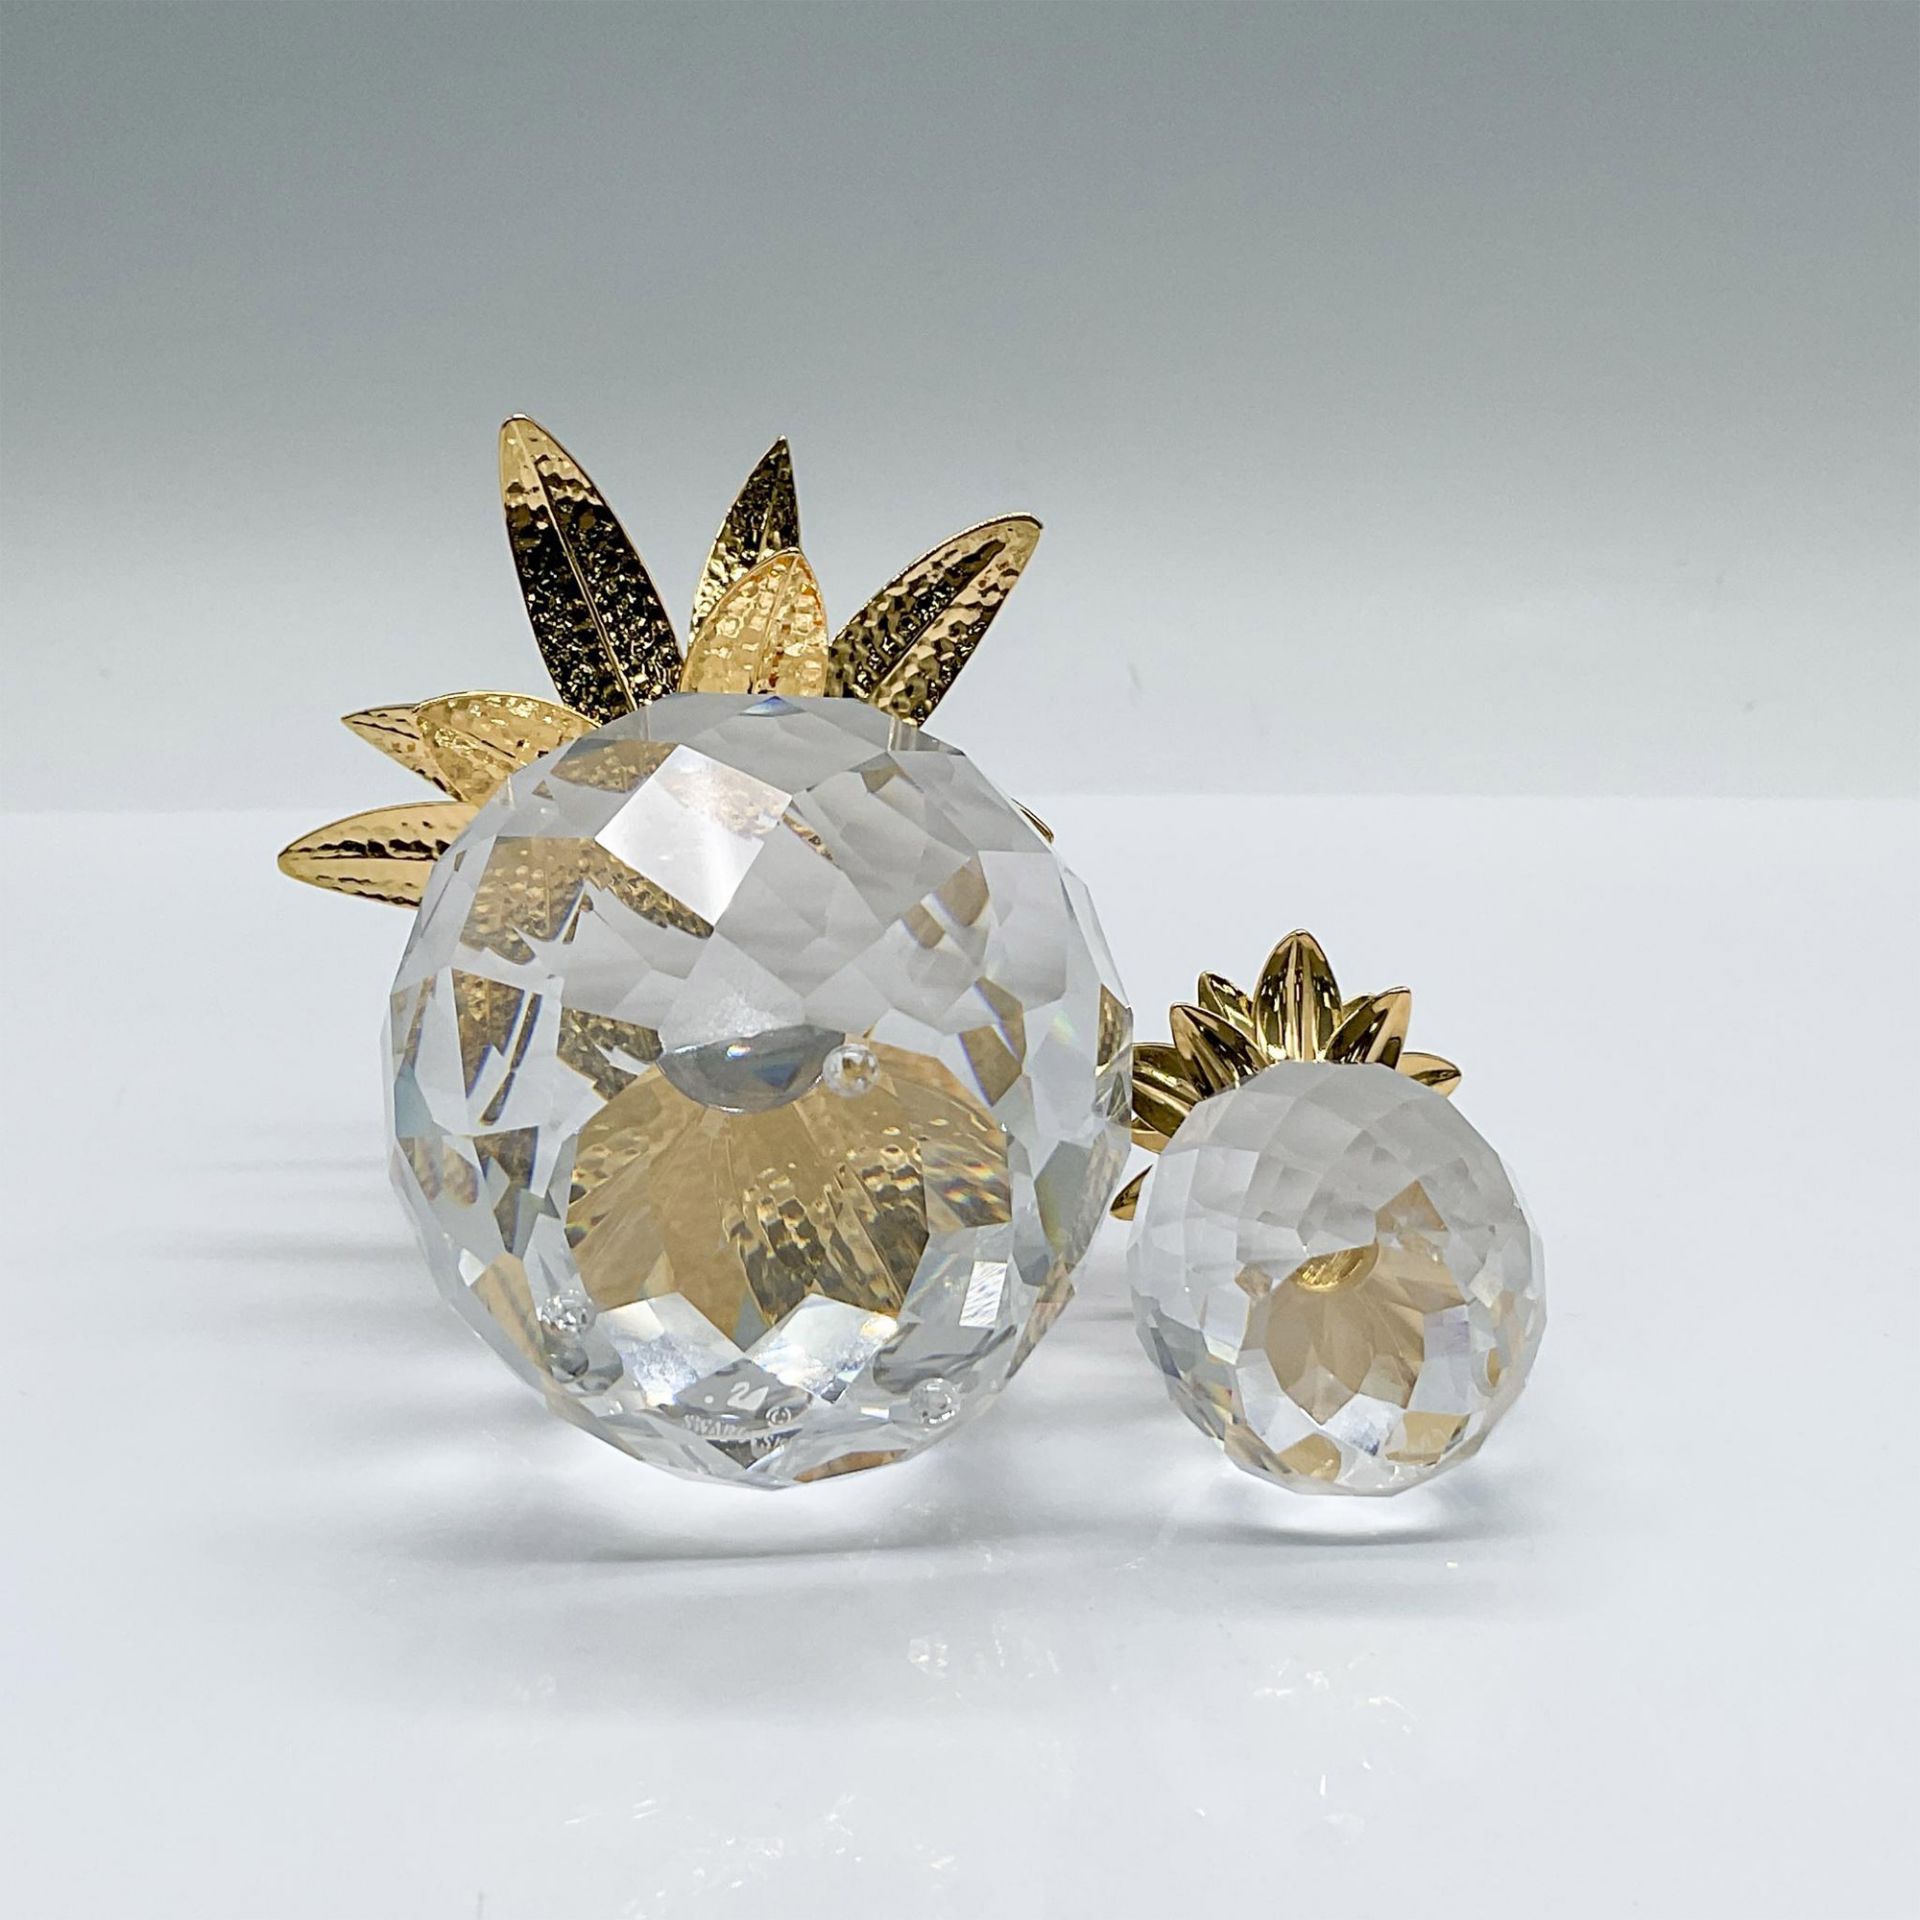 2pc Swarovski Crystal Figurines, Large and Small Pineapple - Bild 3 aus 3